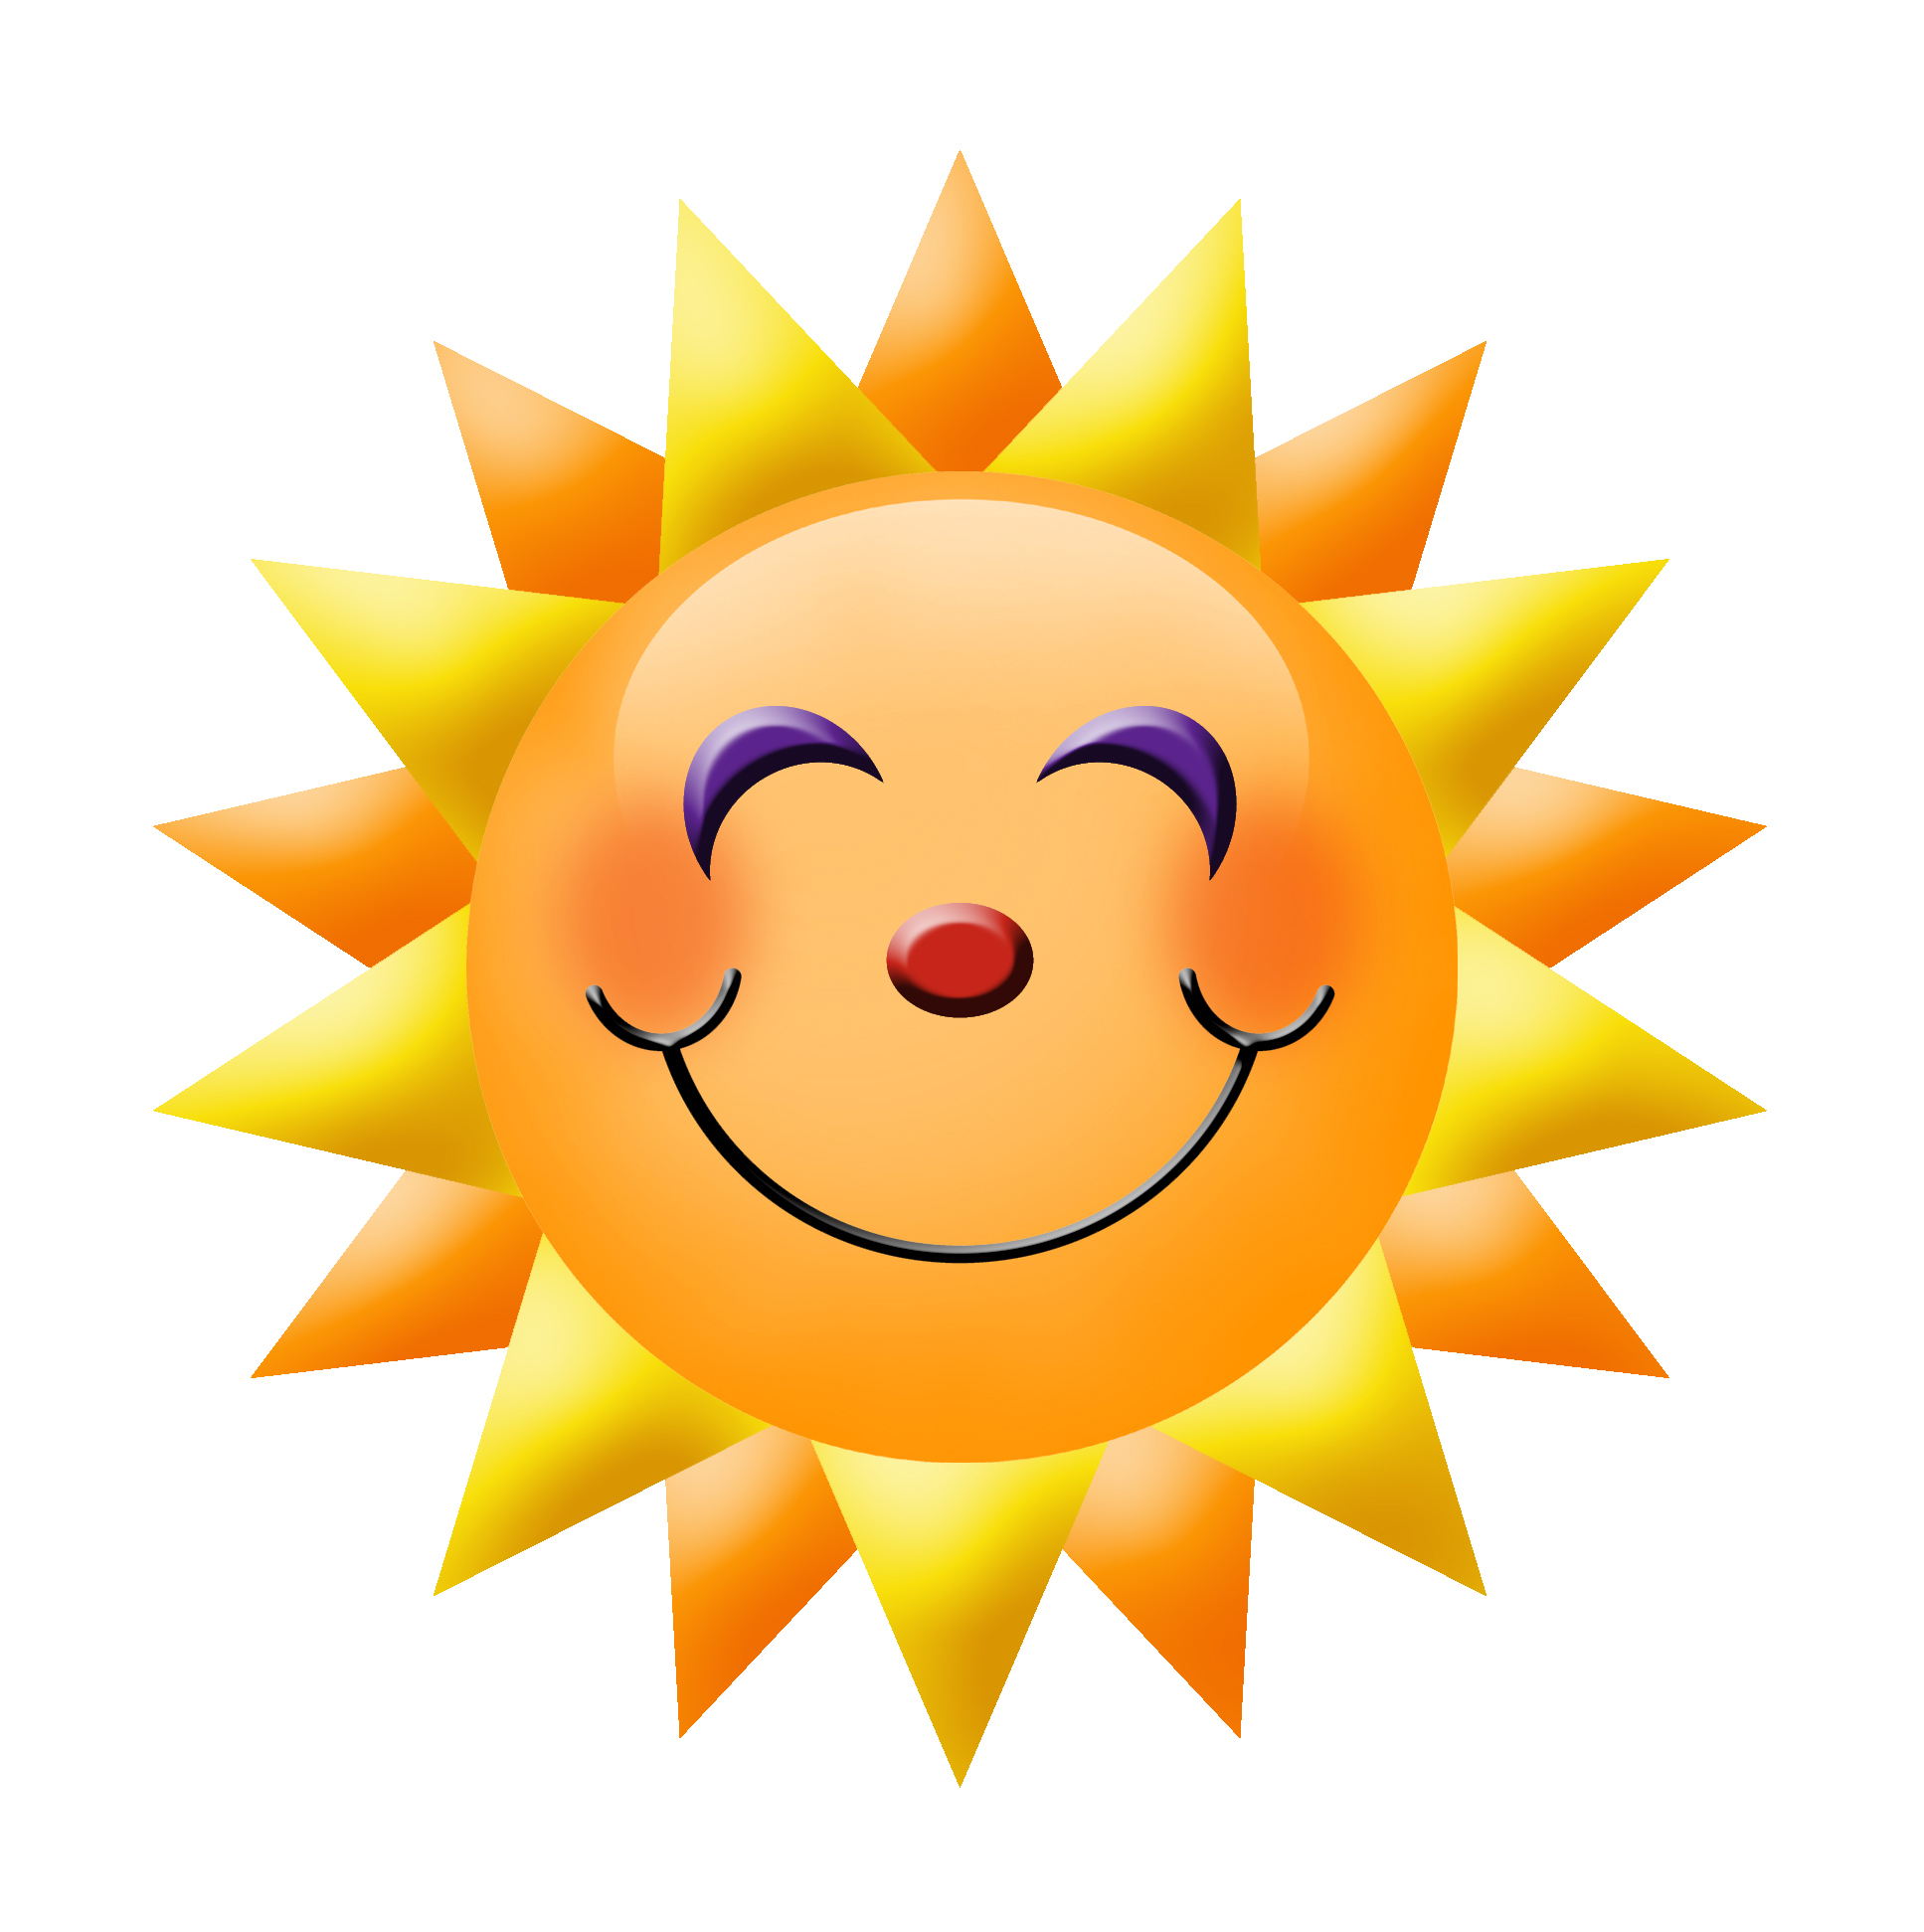 Image of smiling sun